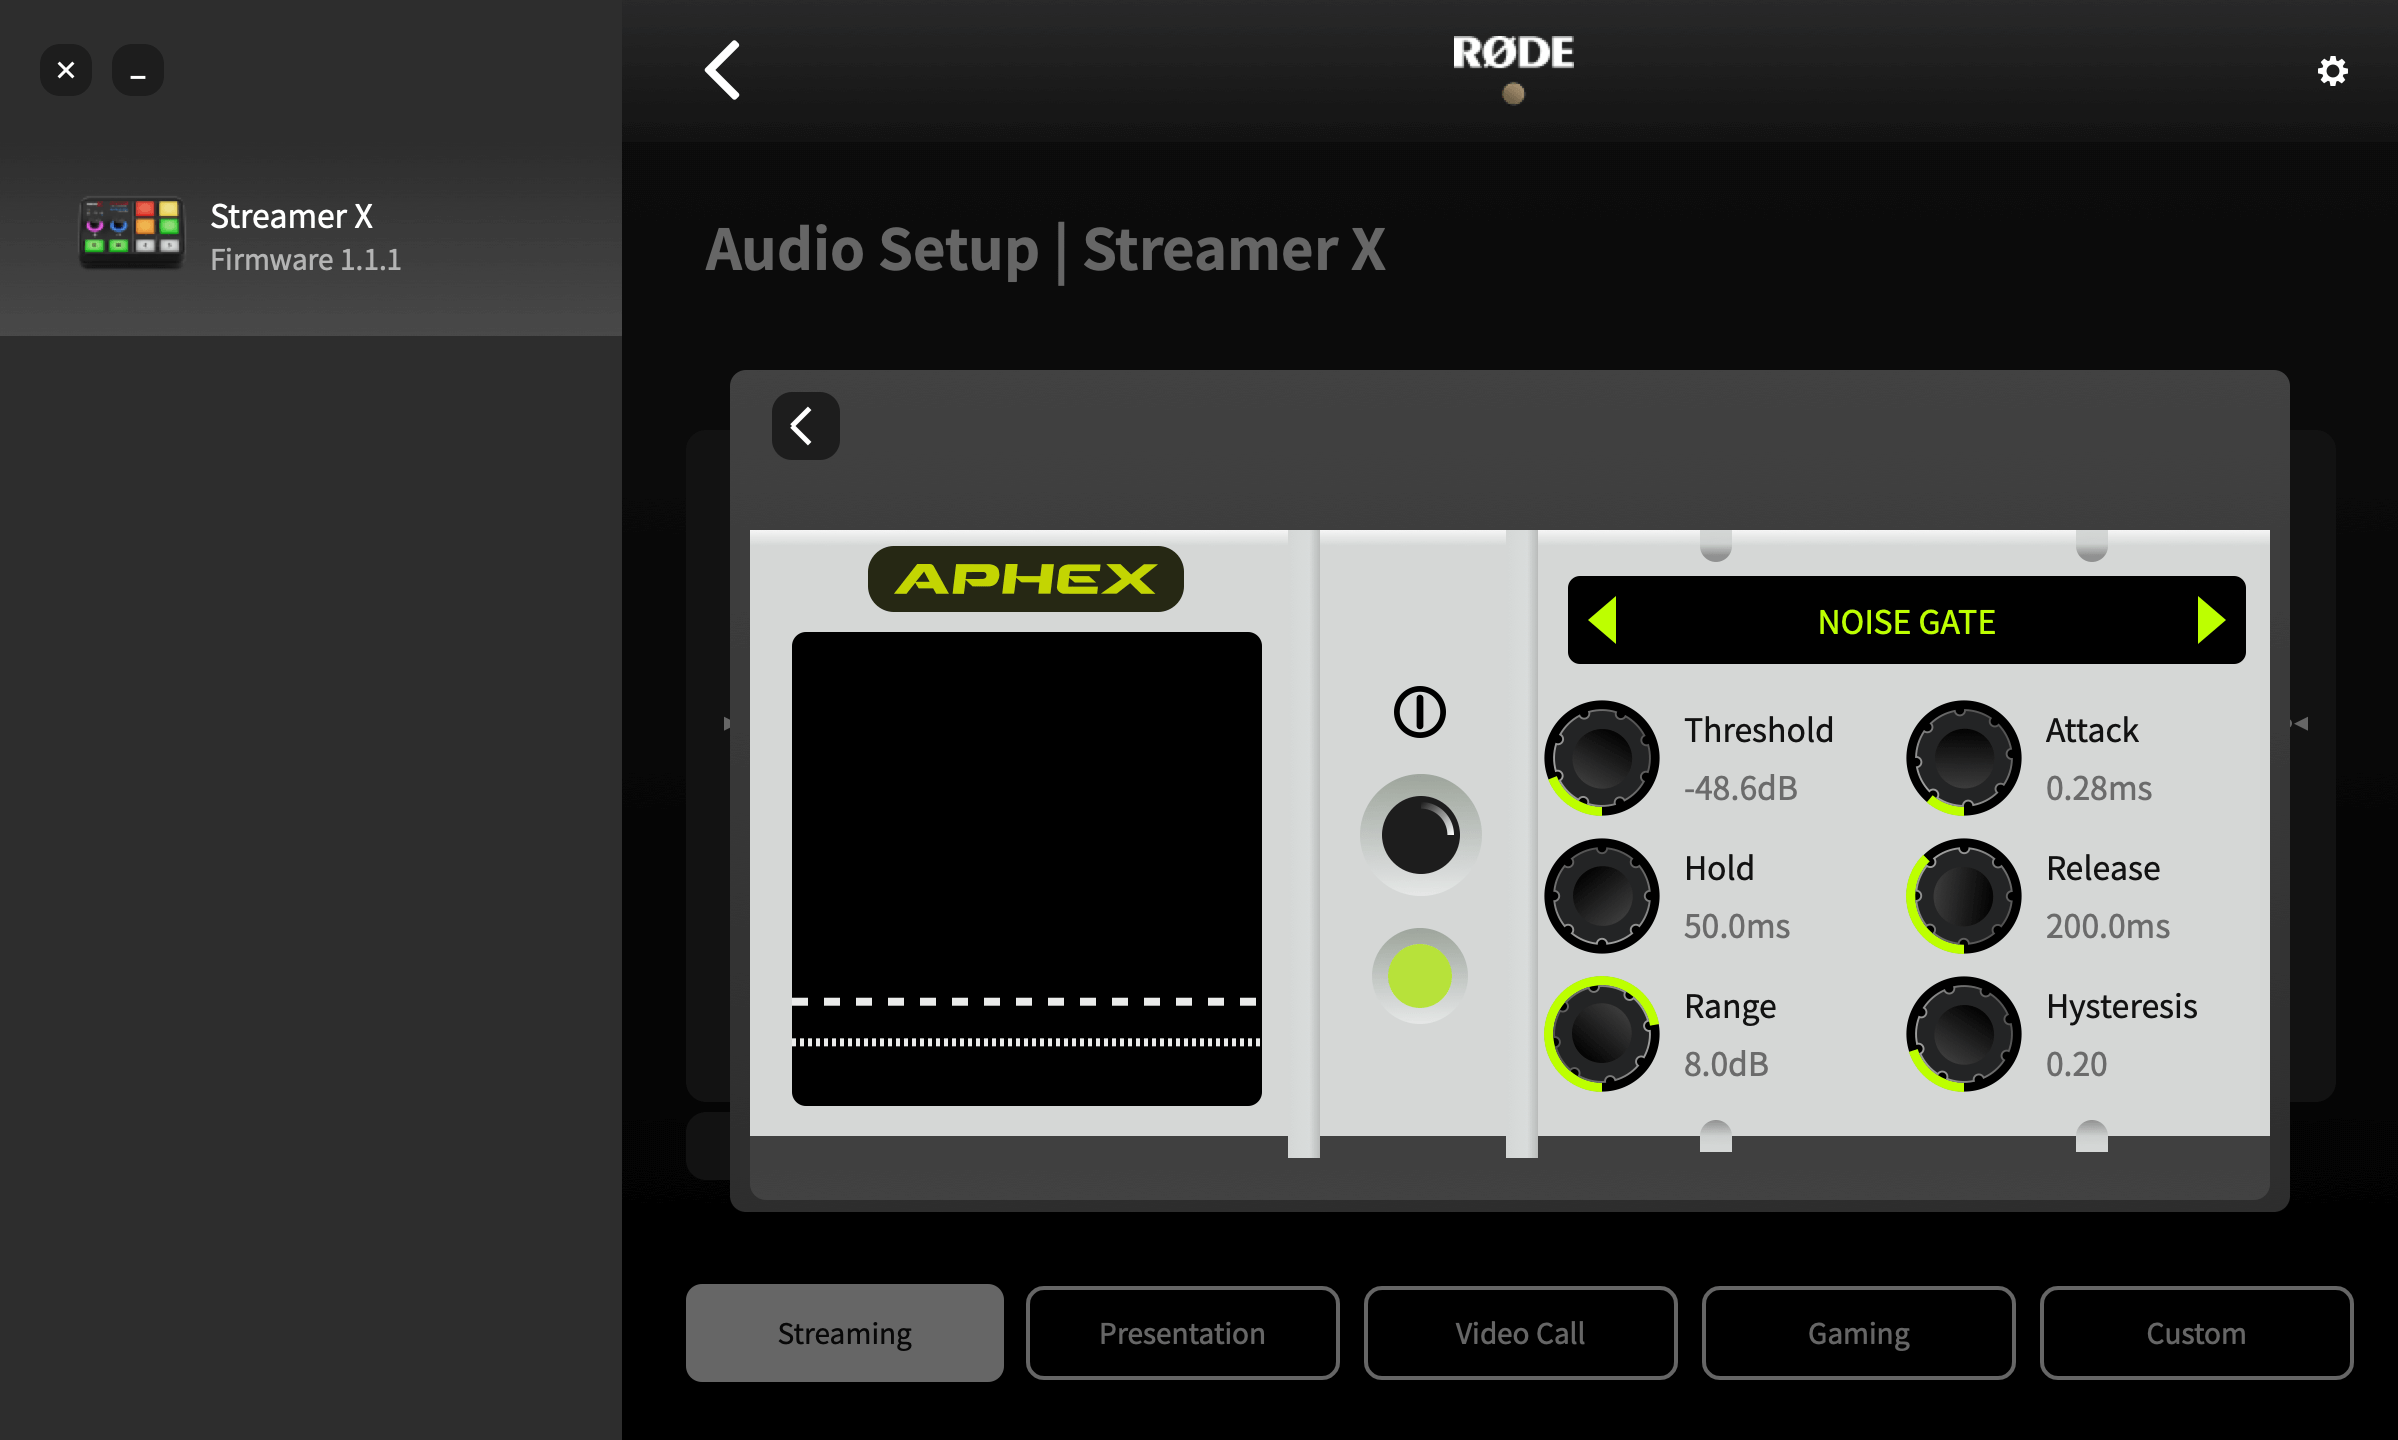 RØDE Central showing Streamer X noise gate settings